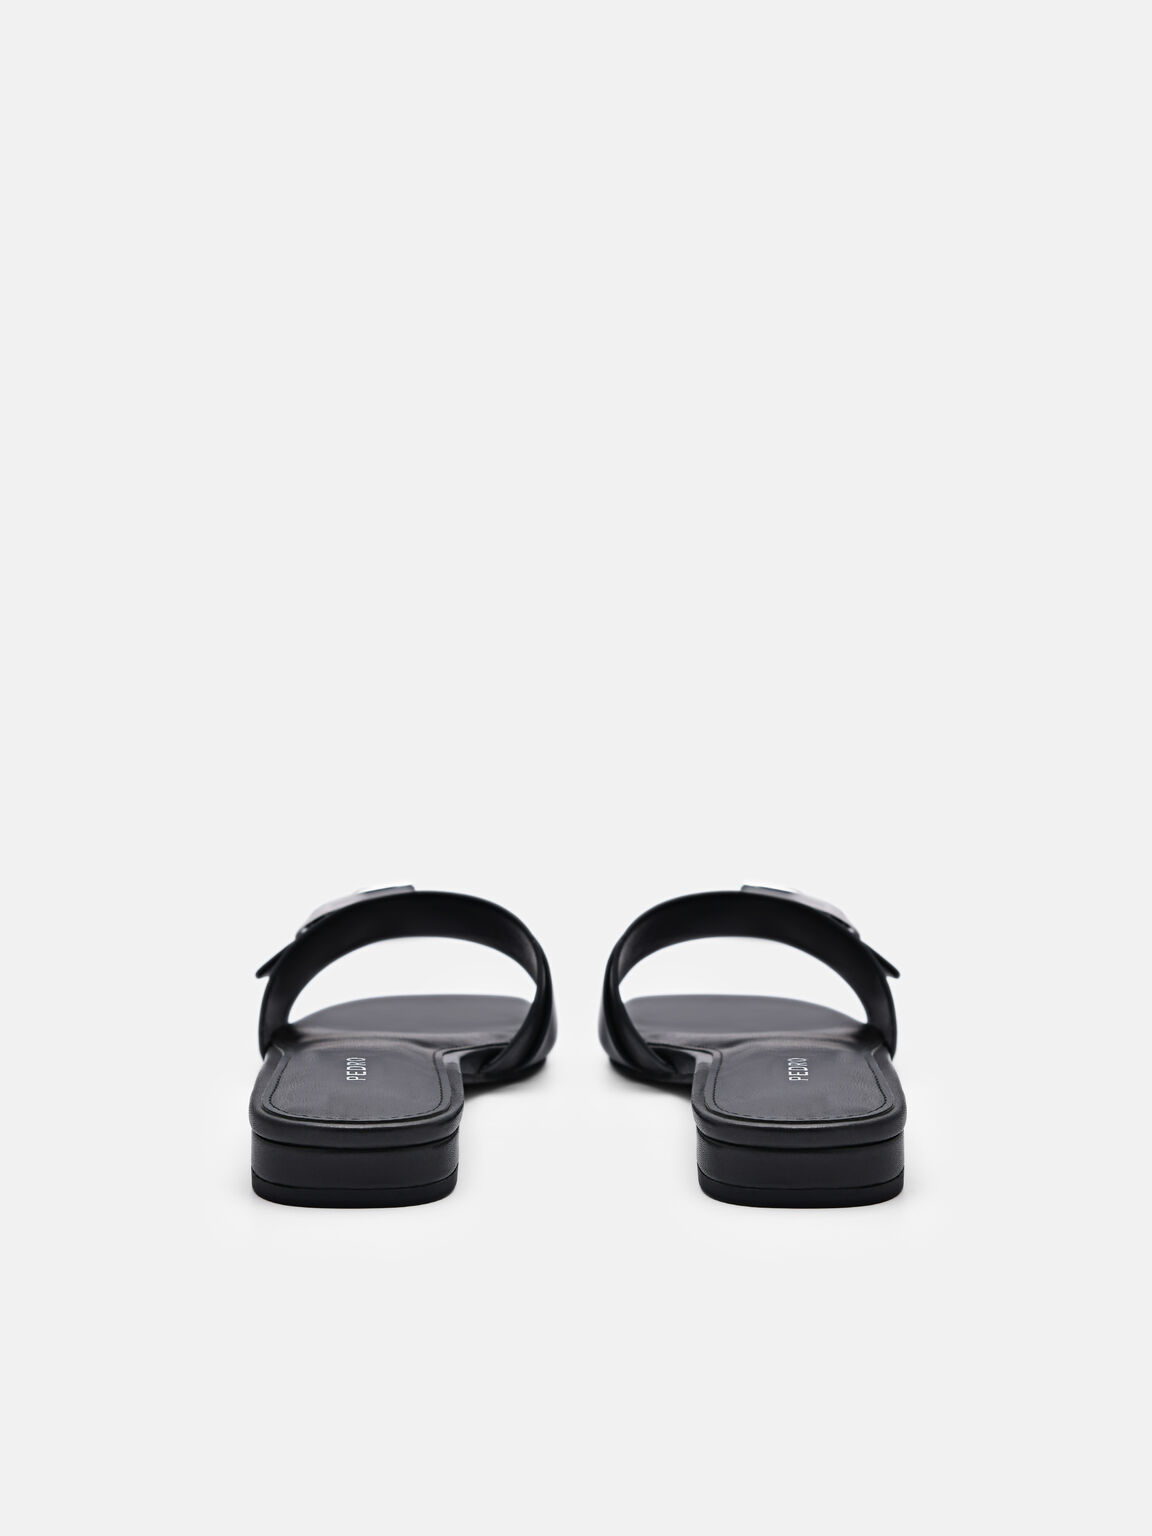 Helix Buckle Sandals, Black, hi-res